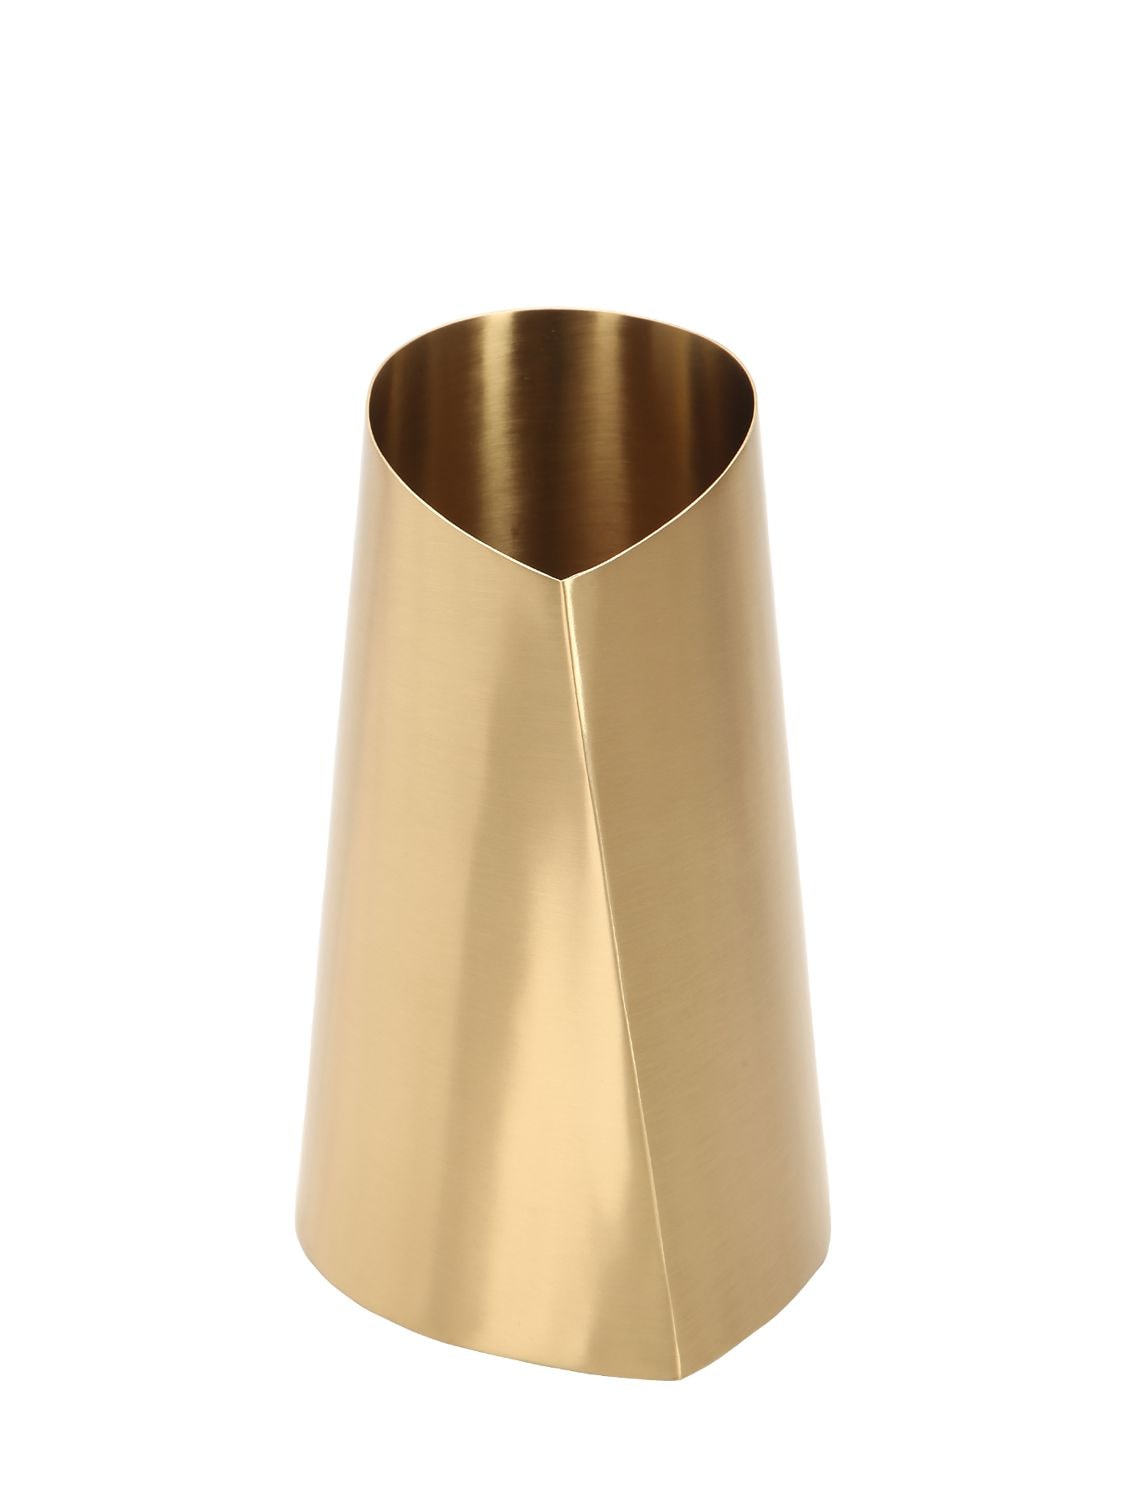 Armani/casa Caneva Large Brass Vase In Gold